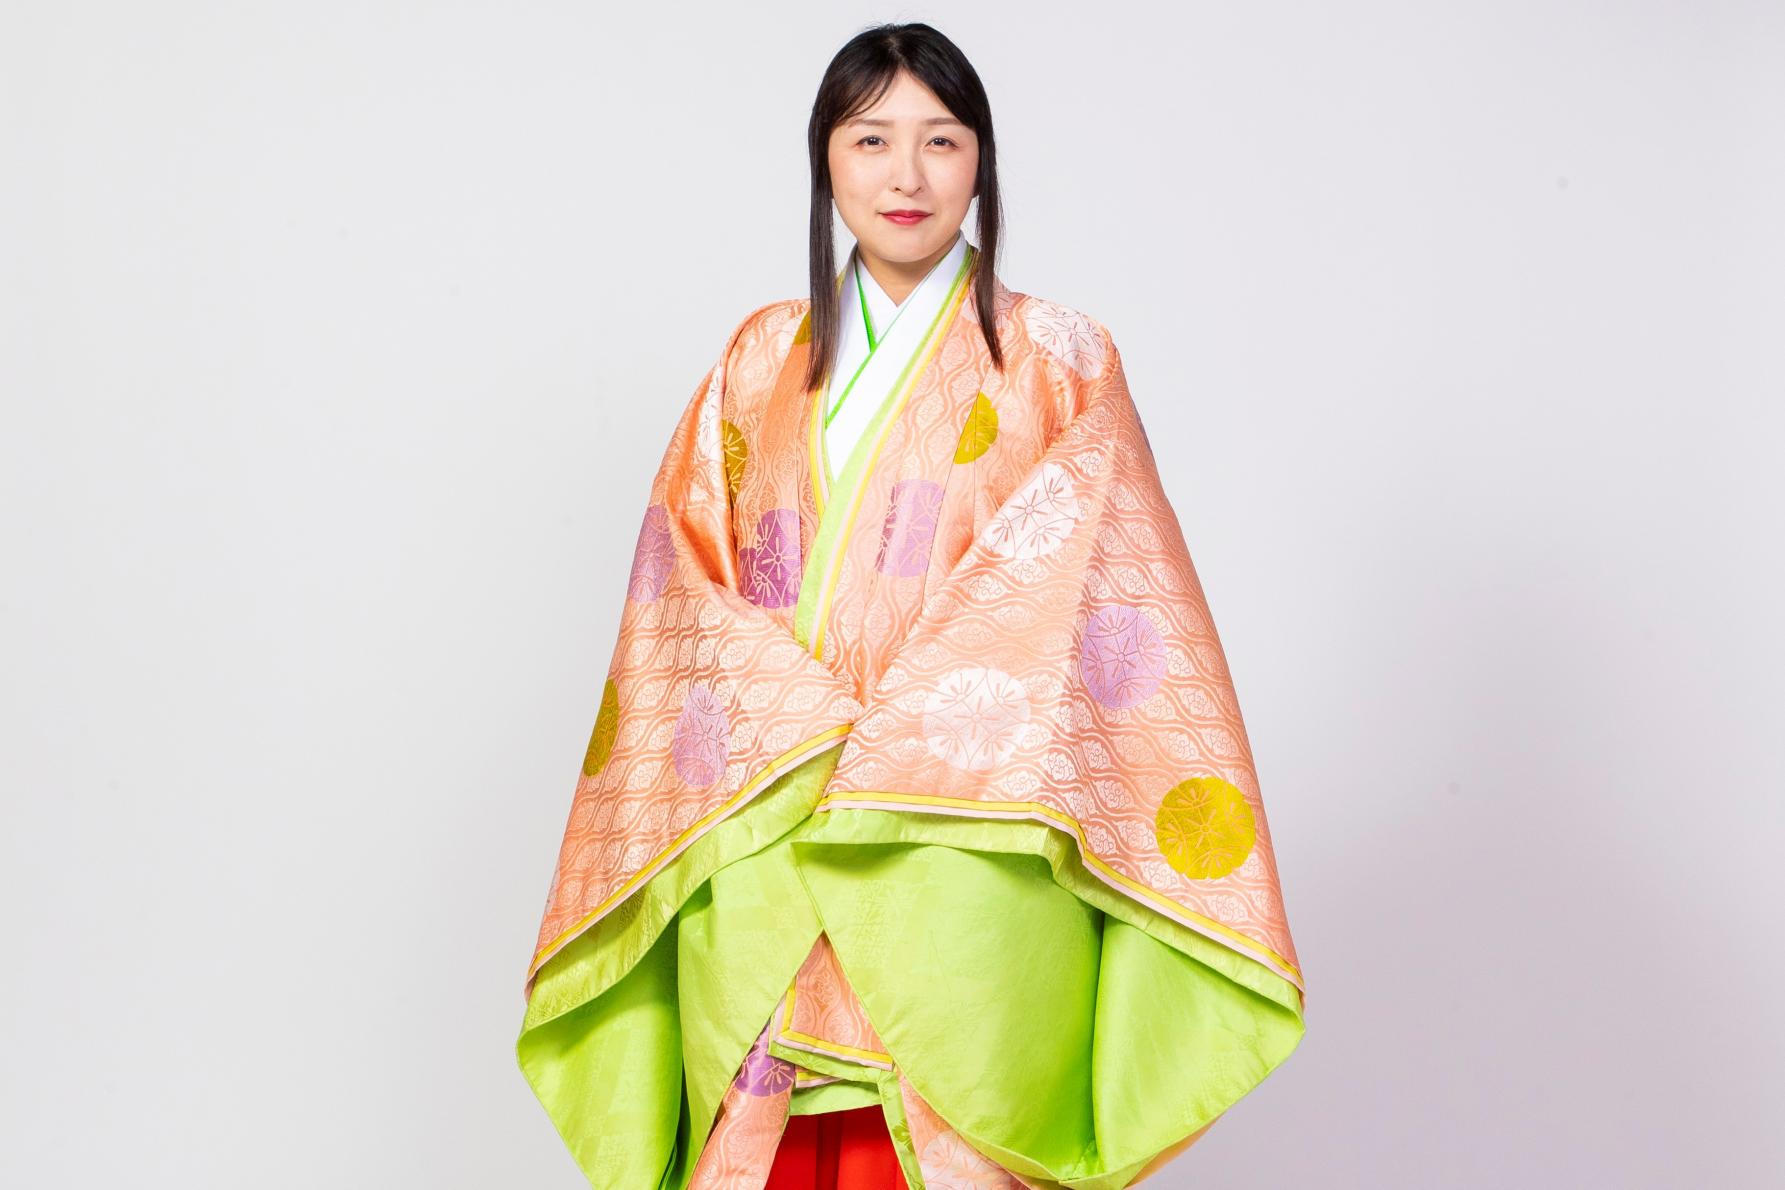 Sengan-en - Trying on traditional clothing-1